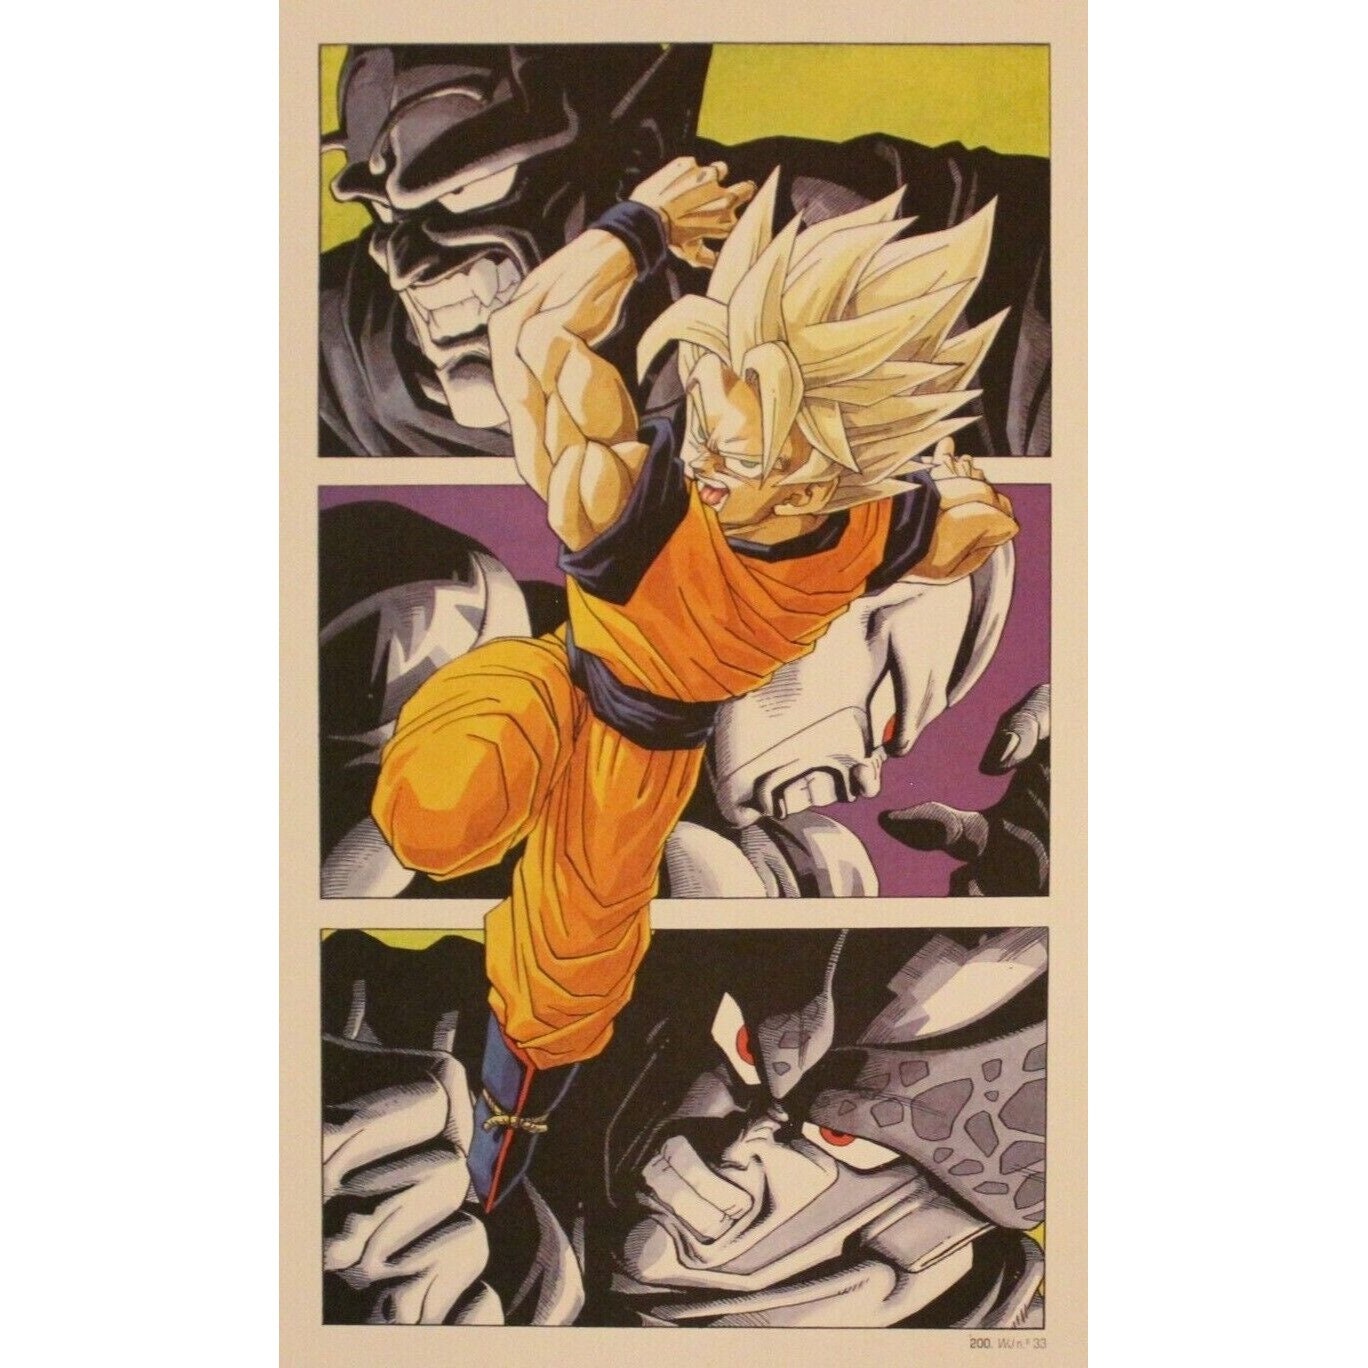 Goku and Frieza Poster for Sale by AaronWeedo